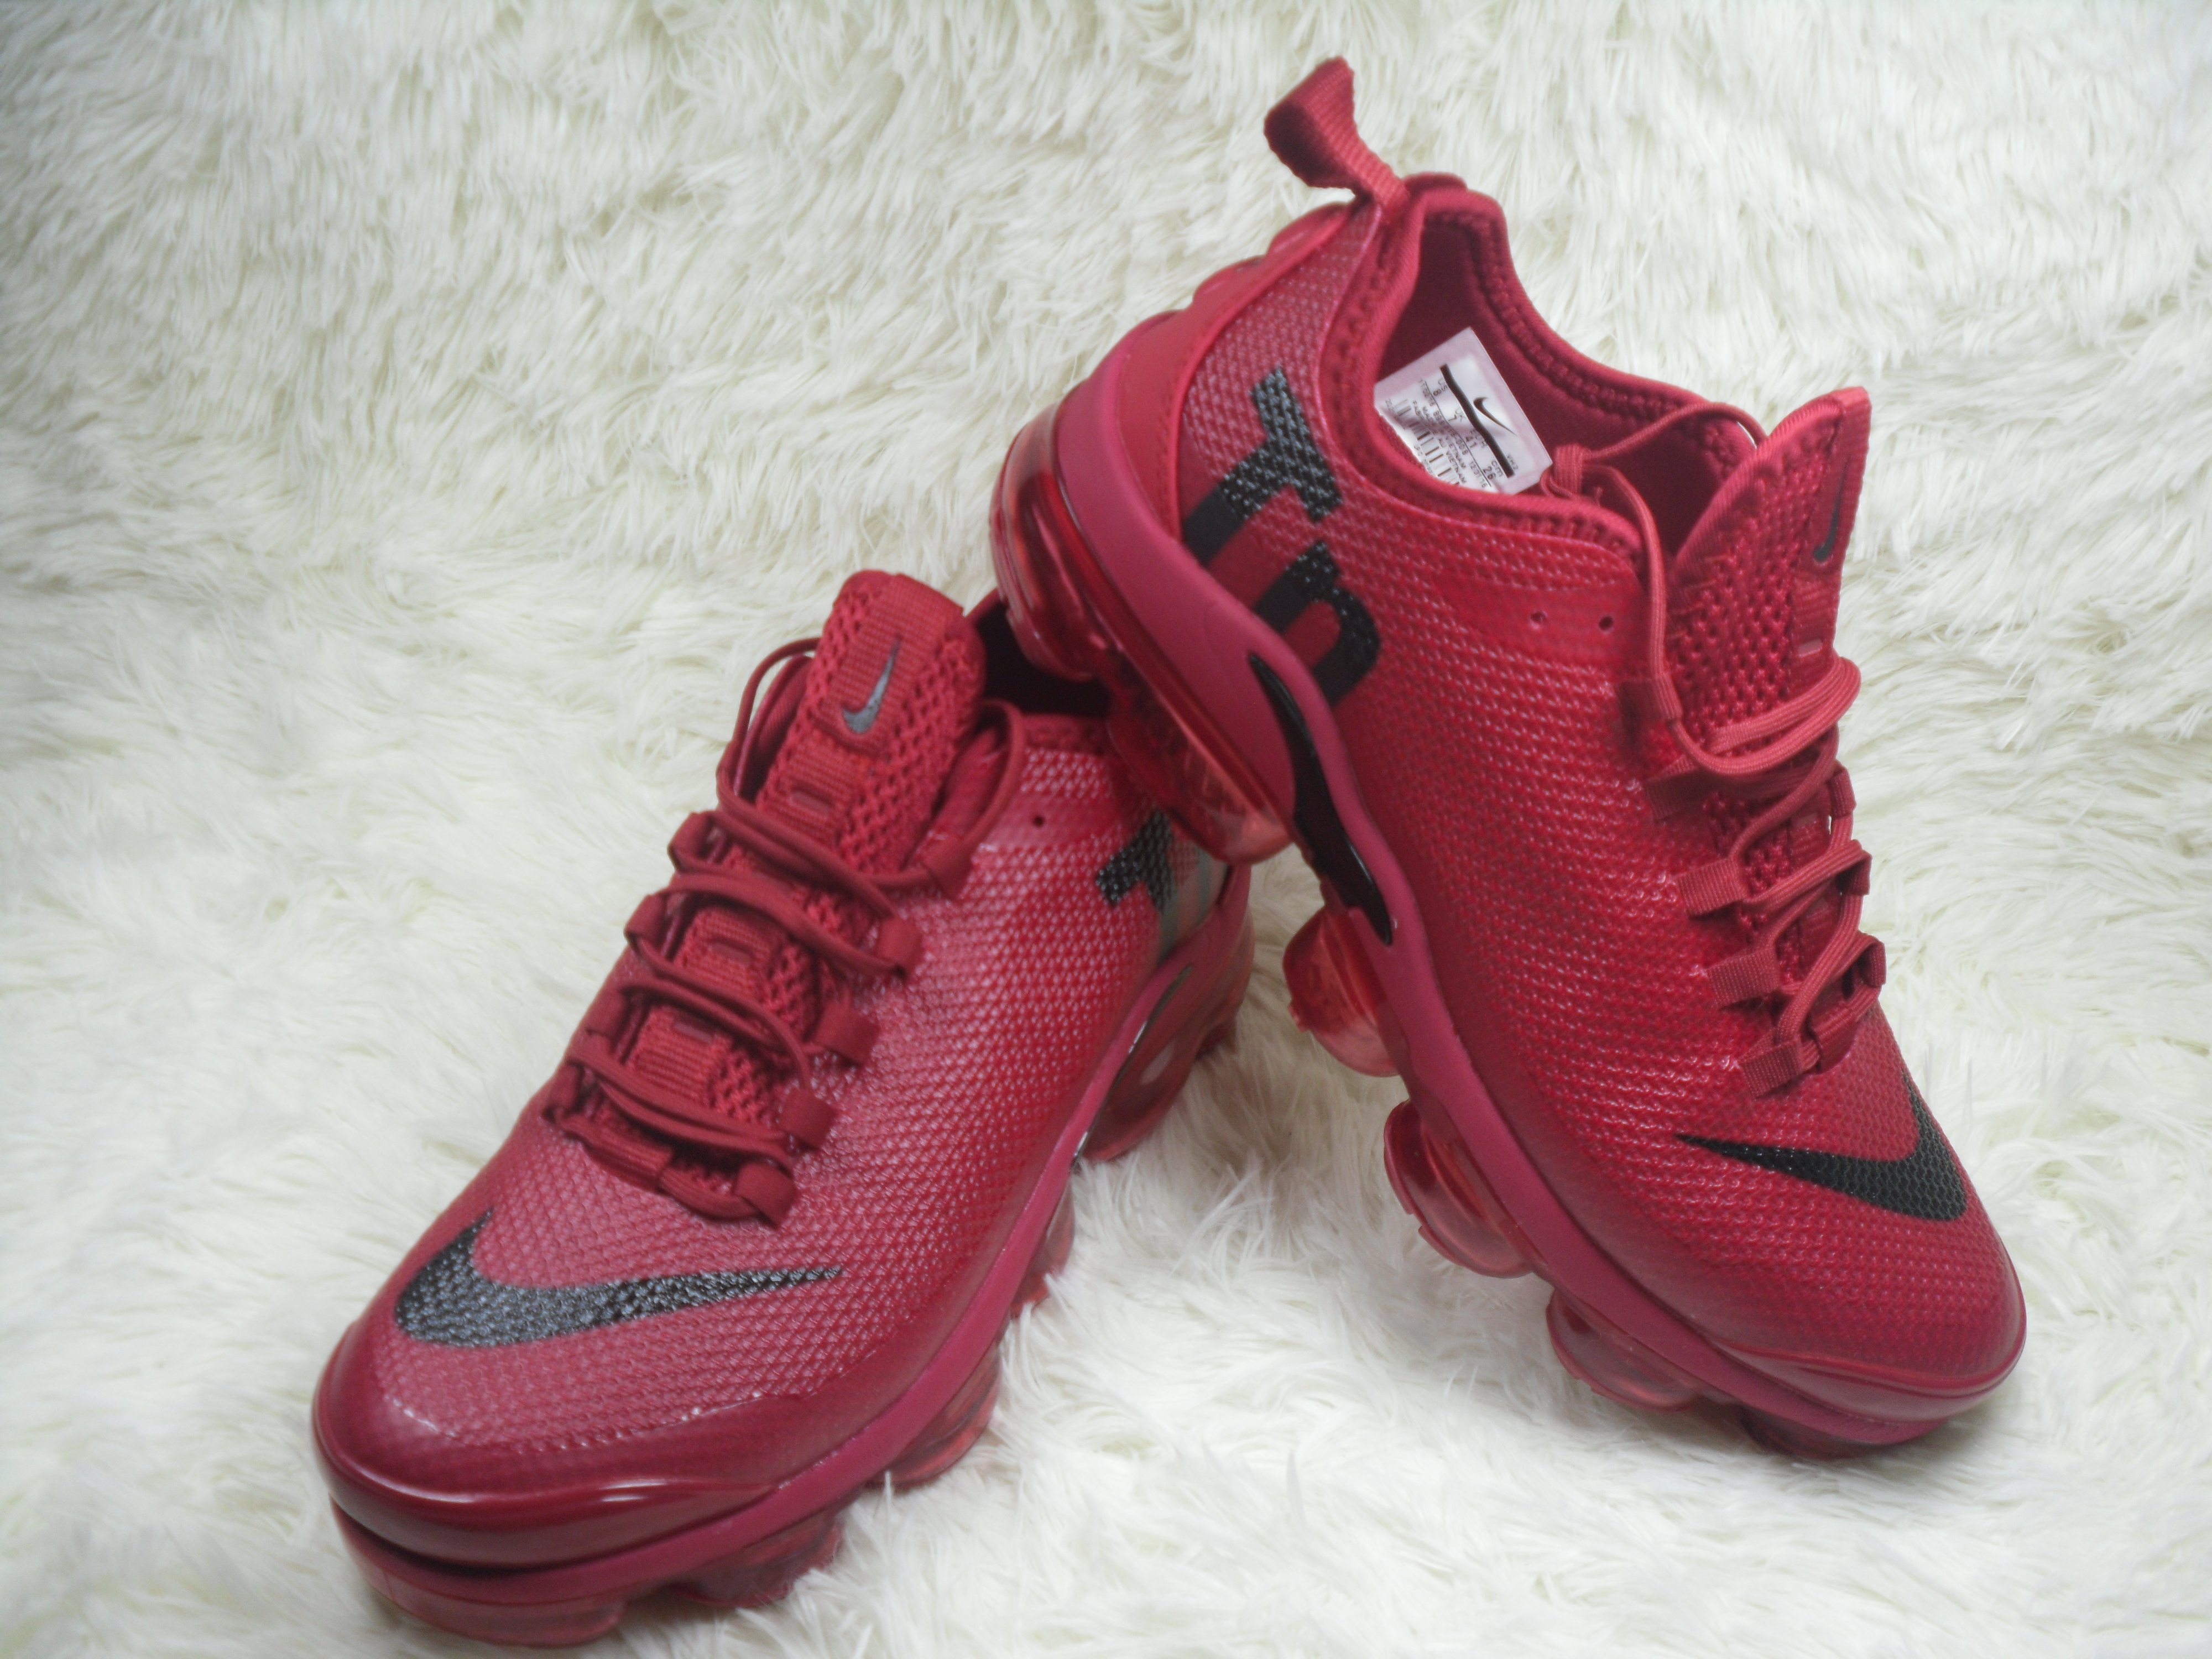 Nike Air Max Plus TN Summer Red Black Shoes